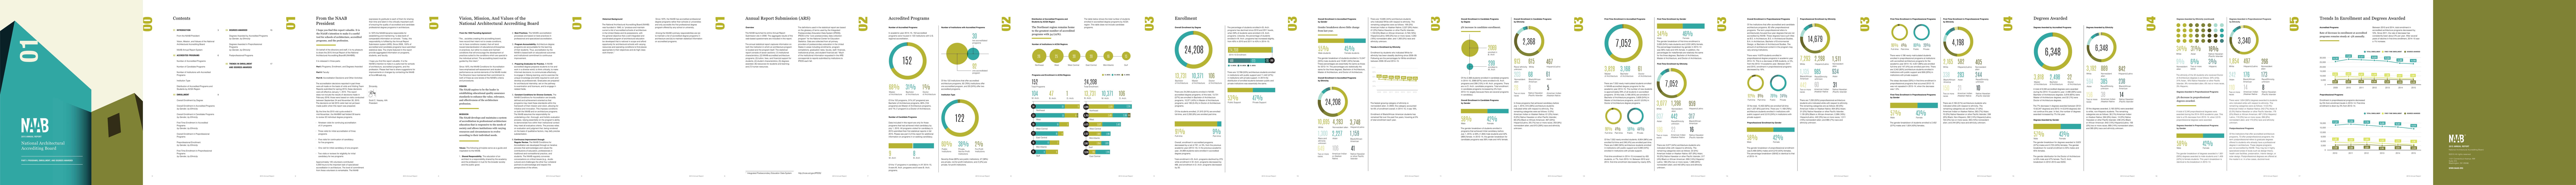 NAAB 2015 Annual Report